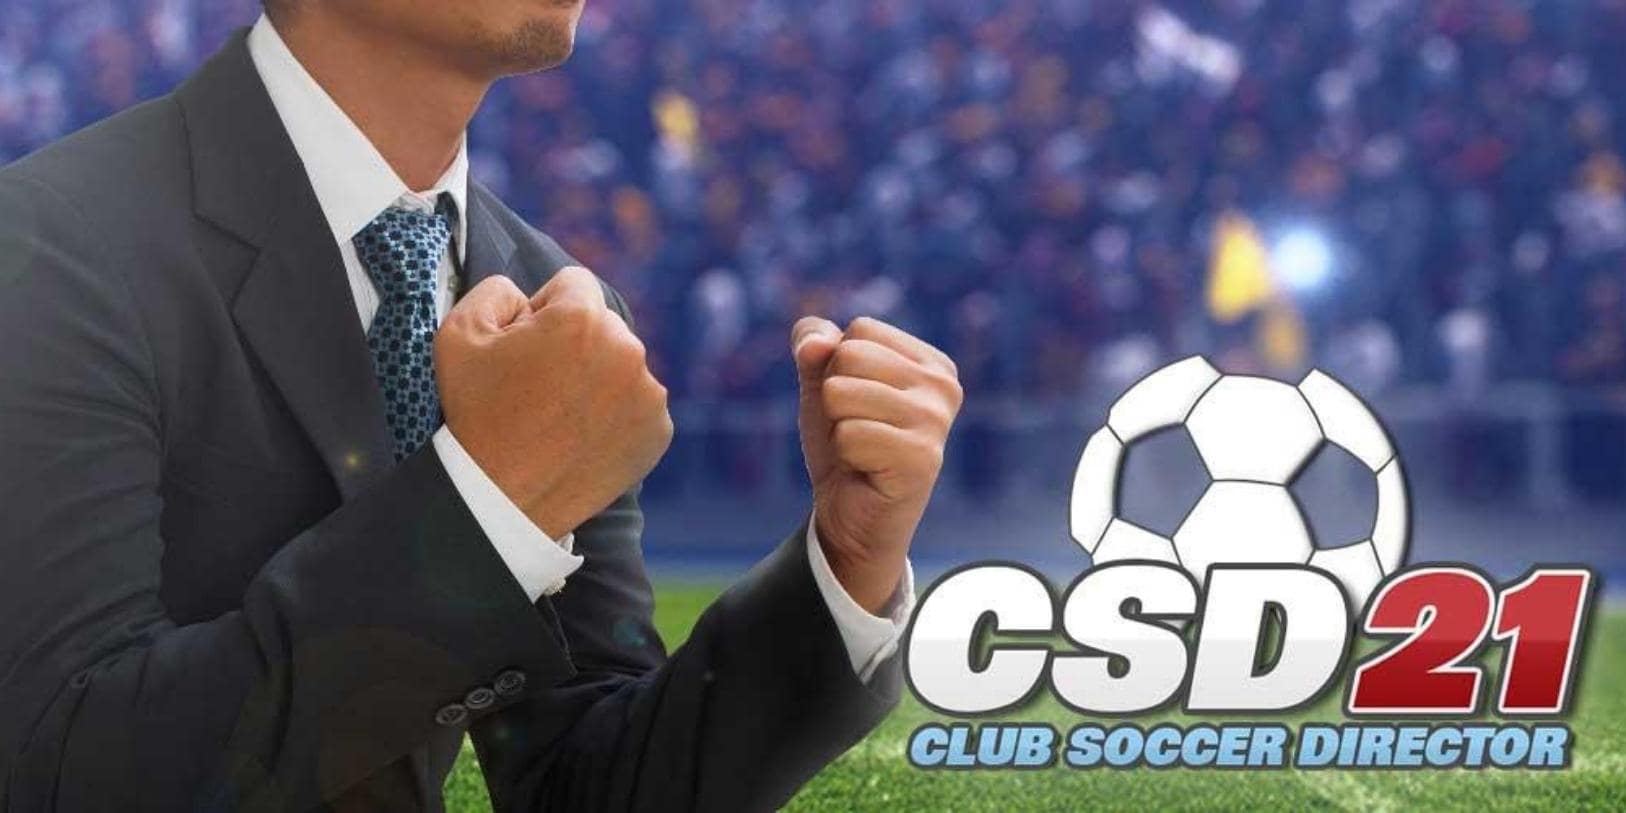 Club Soccer Director 2021 Mod Apk v1.5.4 (Unlimited Money)